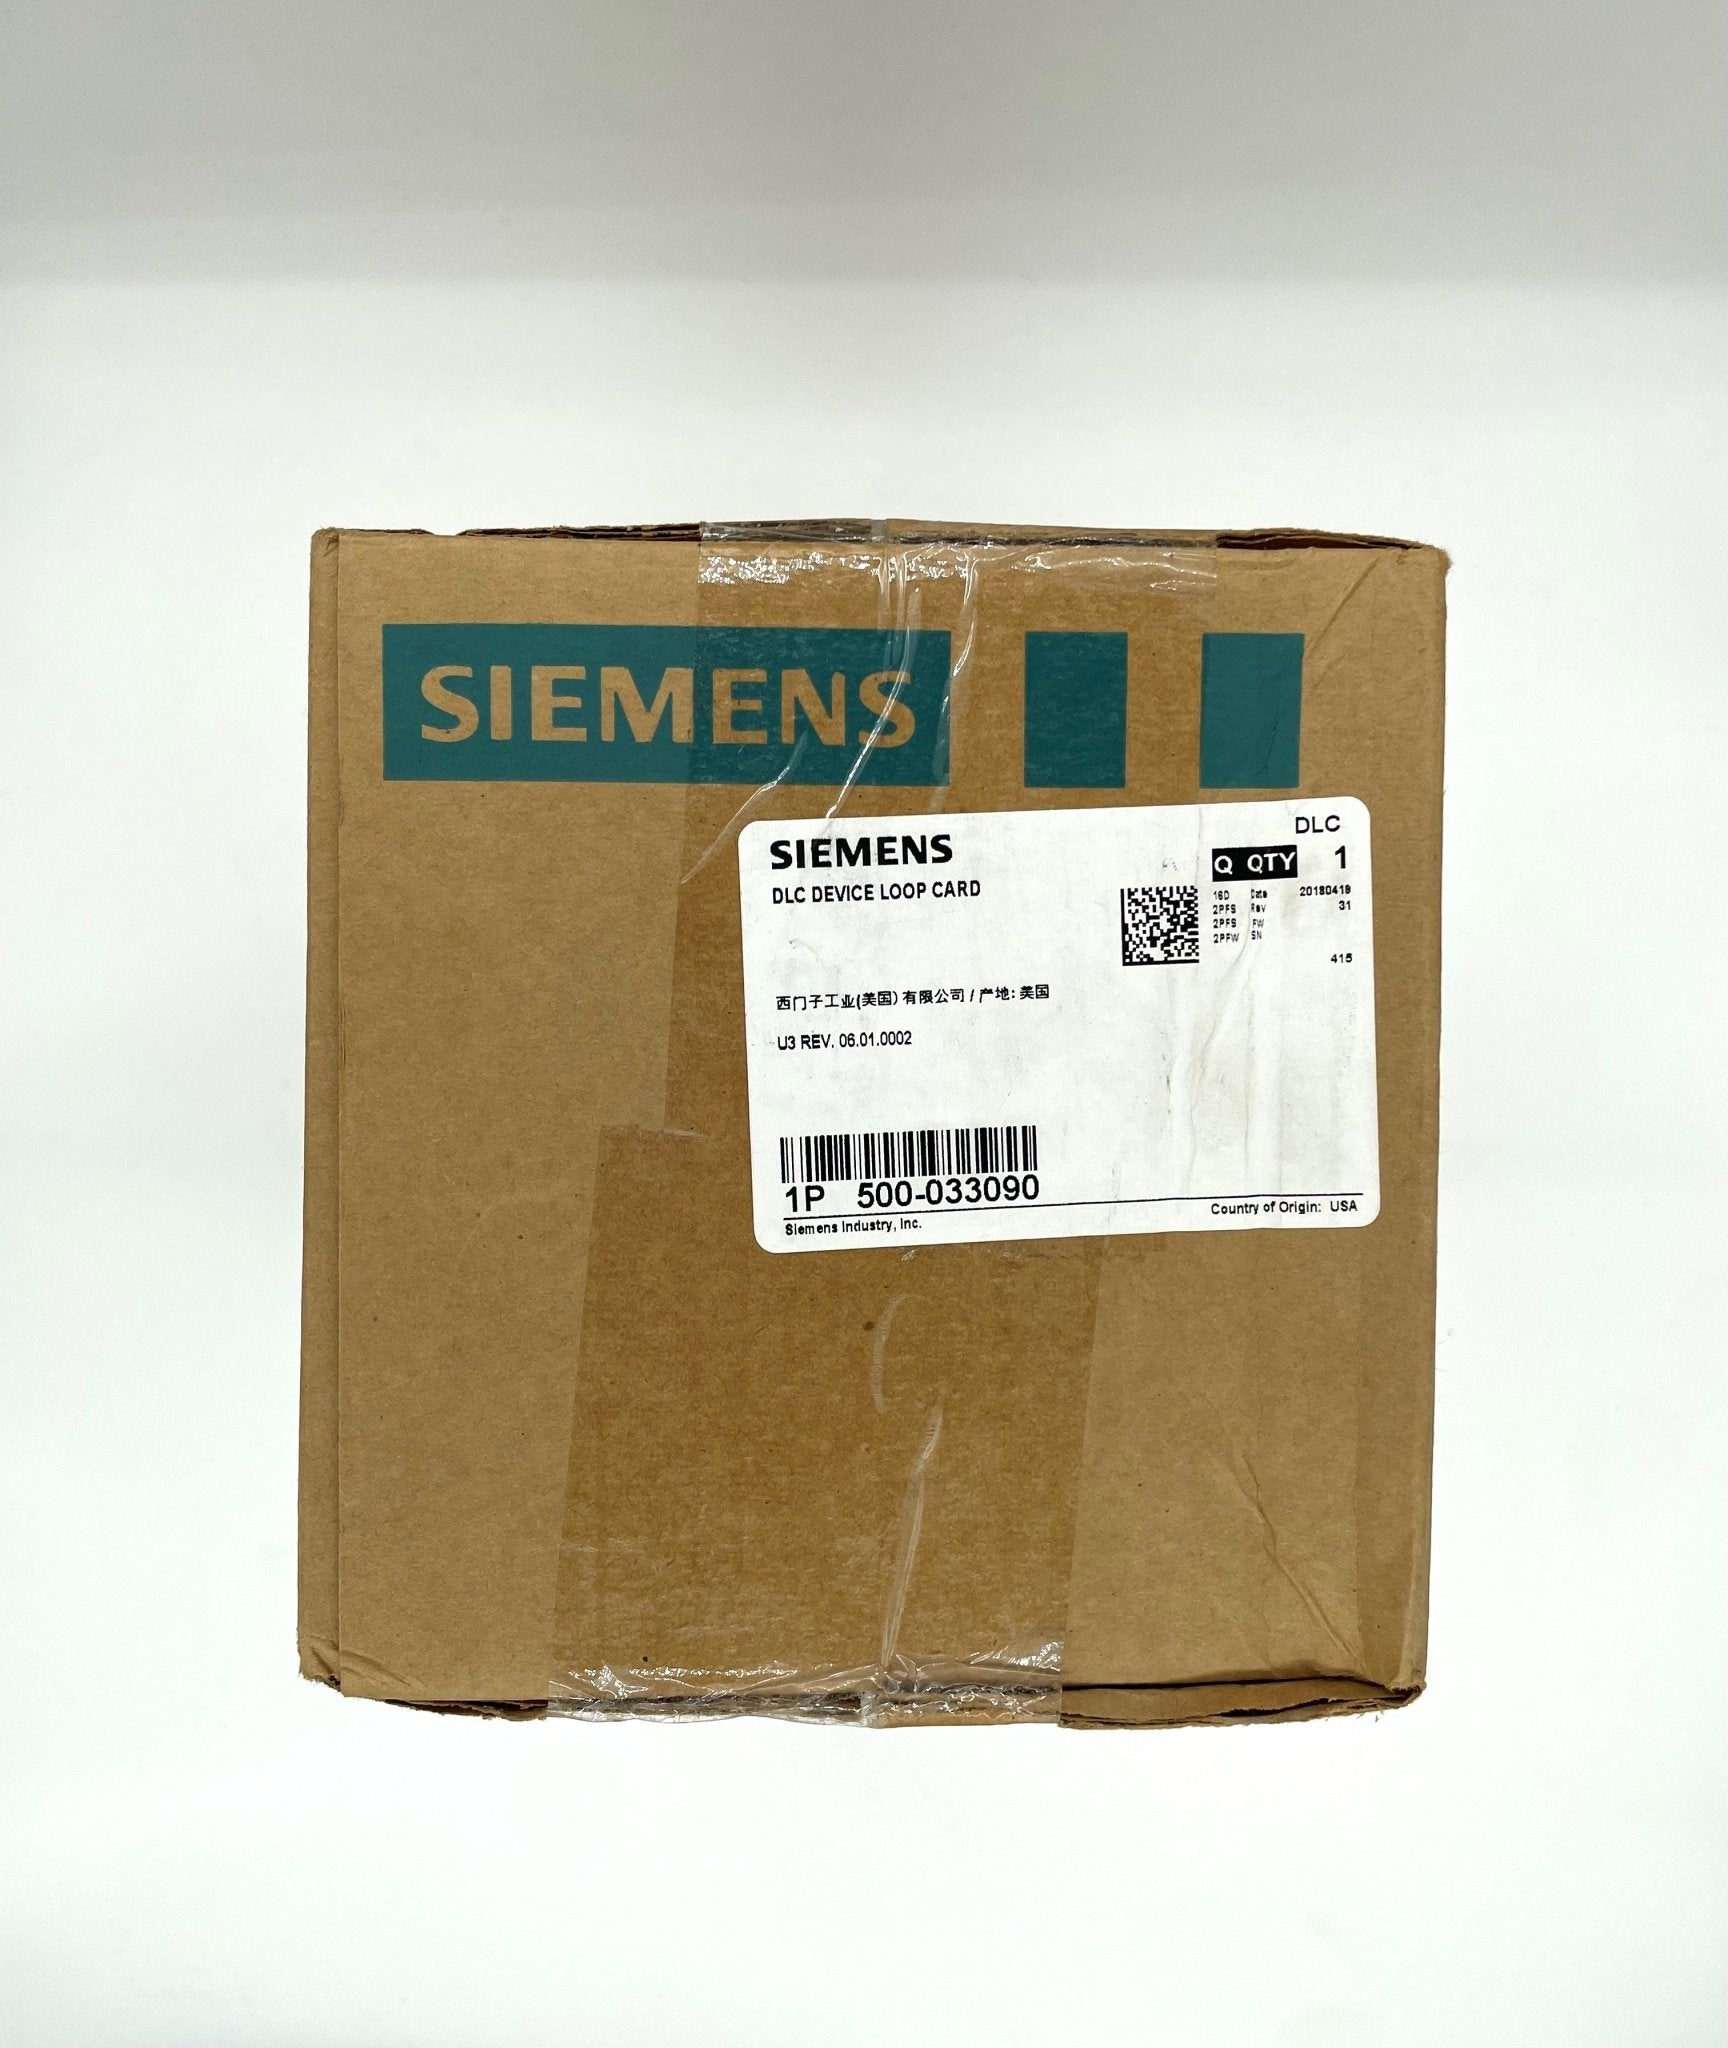 Siemens DLC - The Fire Alarm Supplier